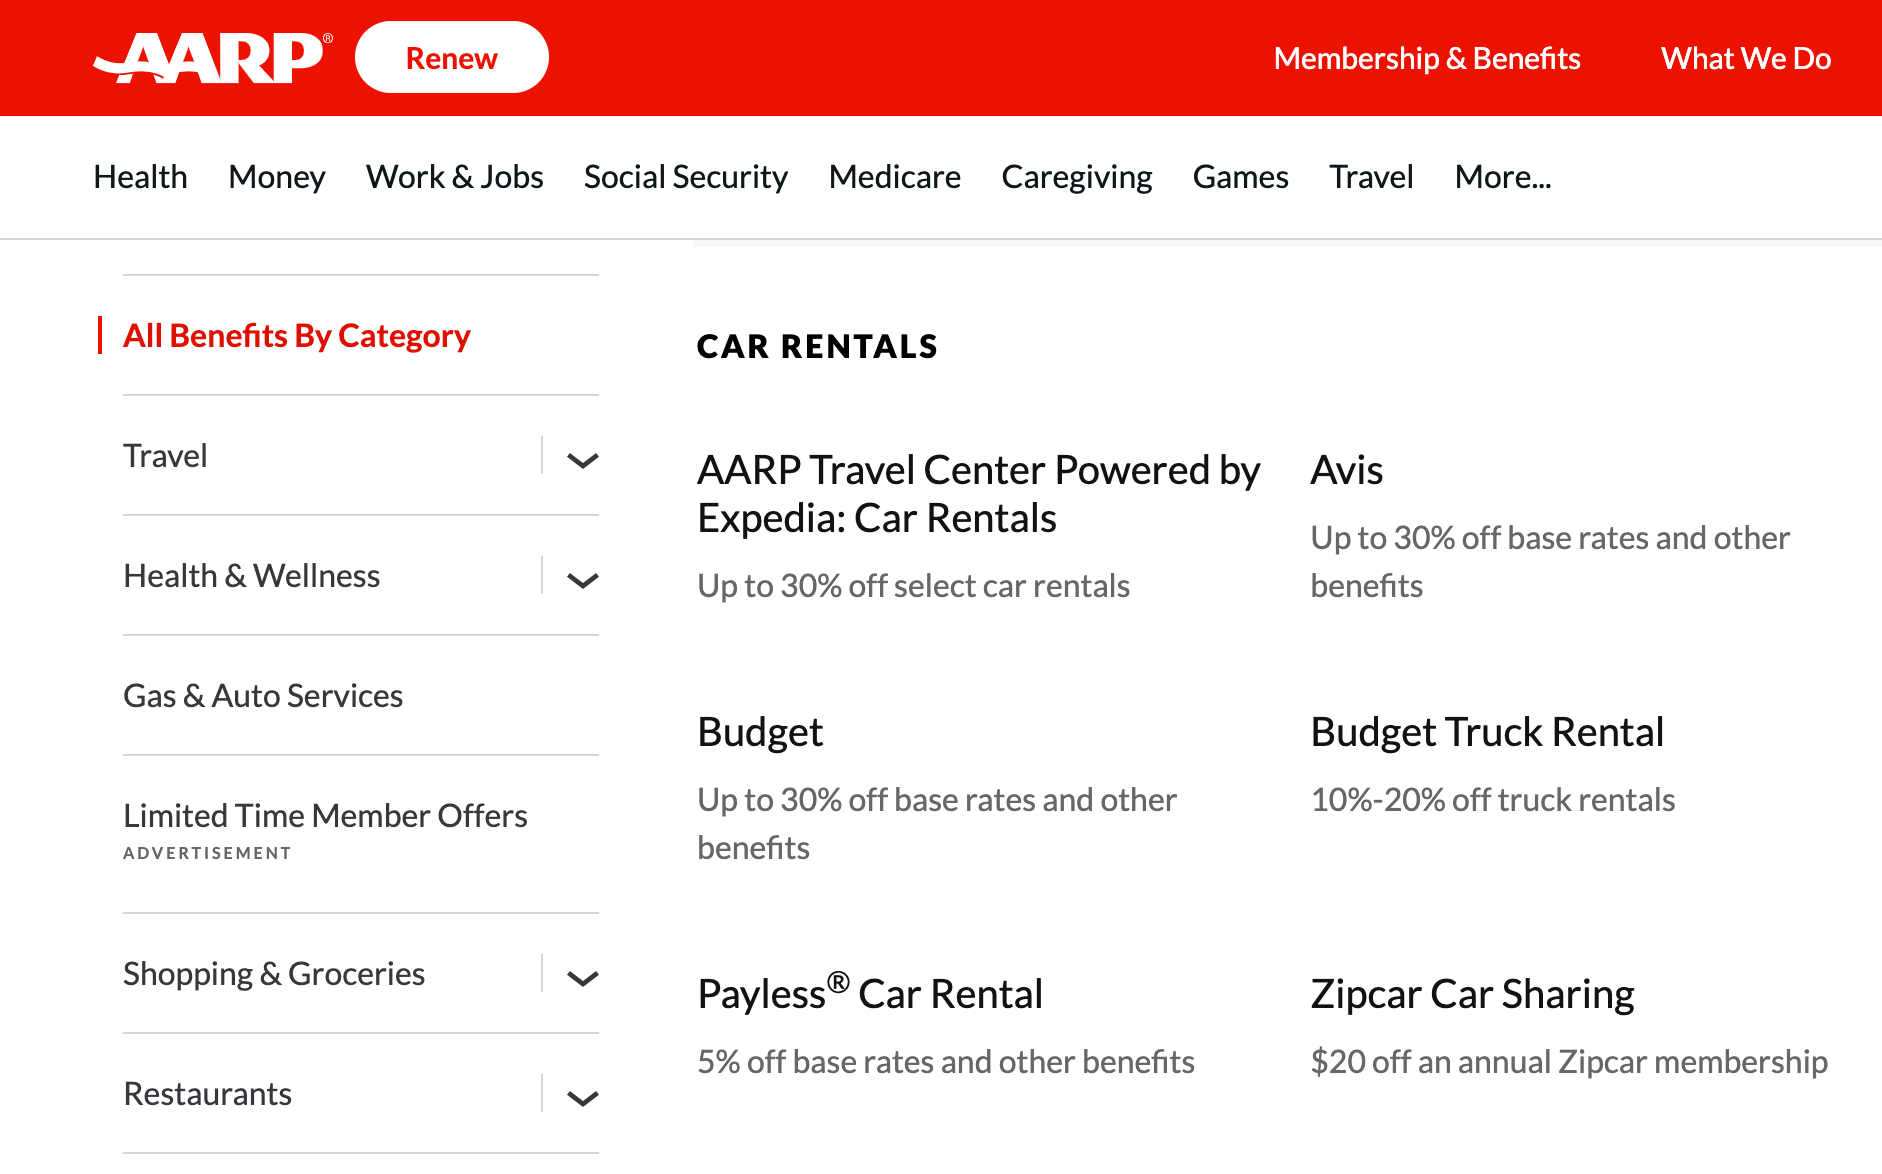 AARP web page showing car rental discounts.